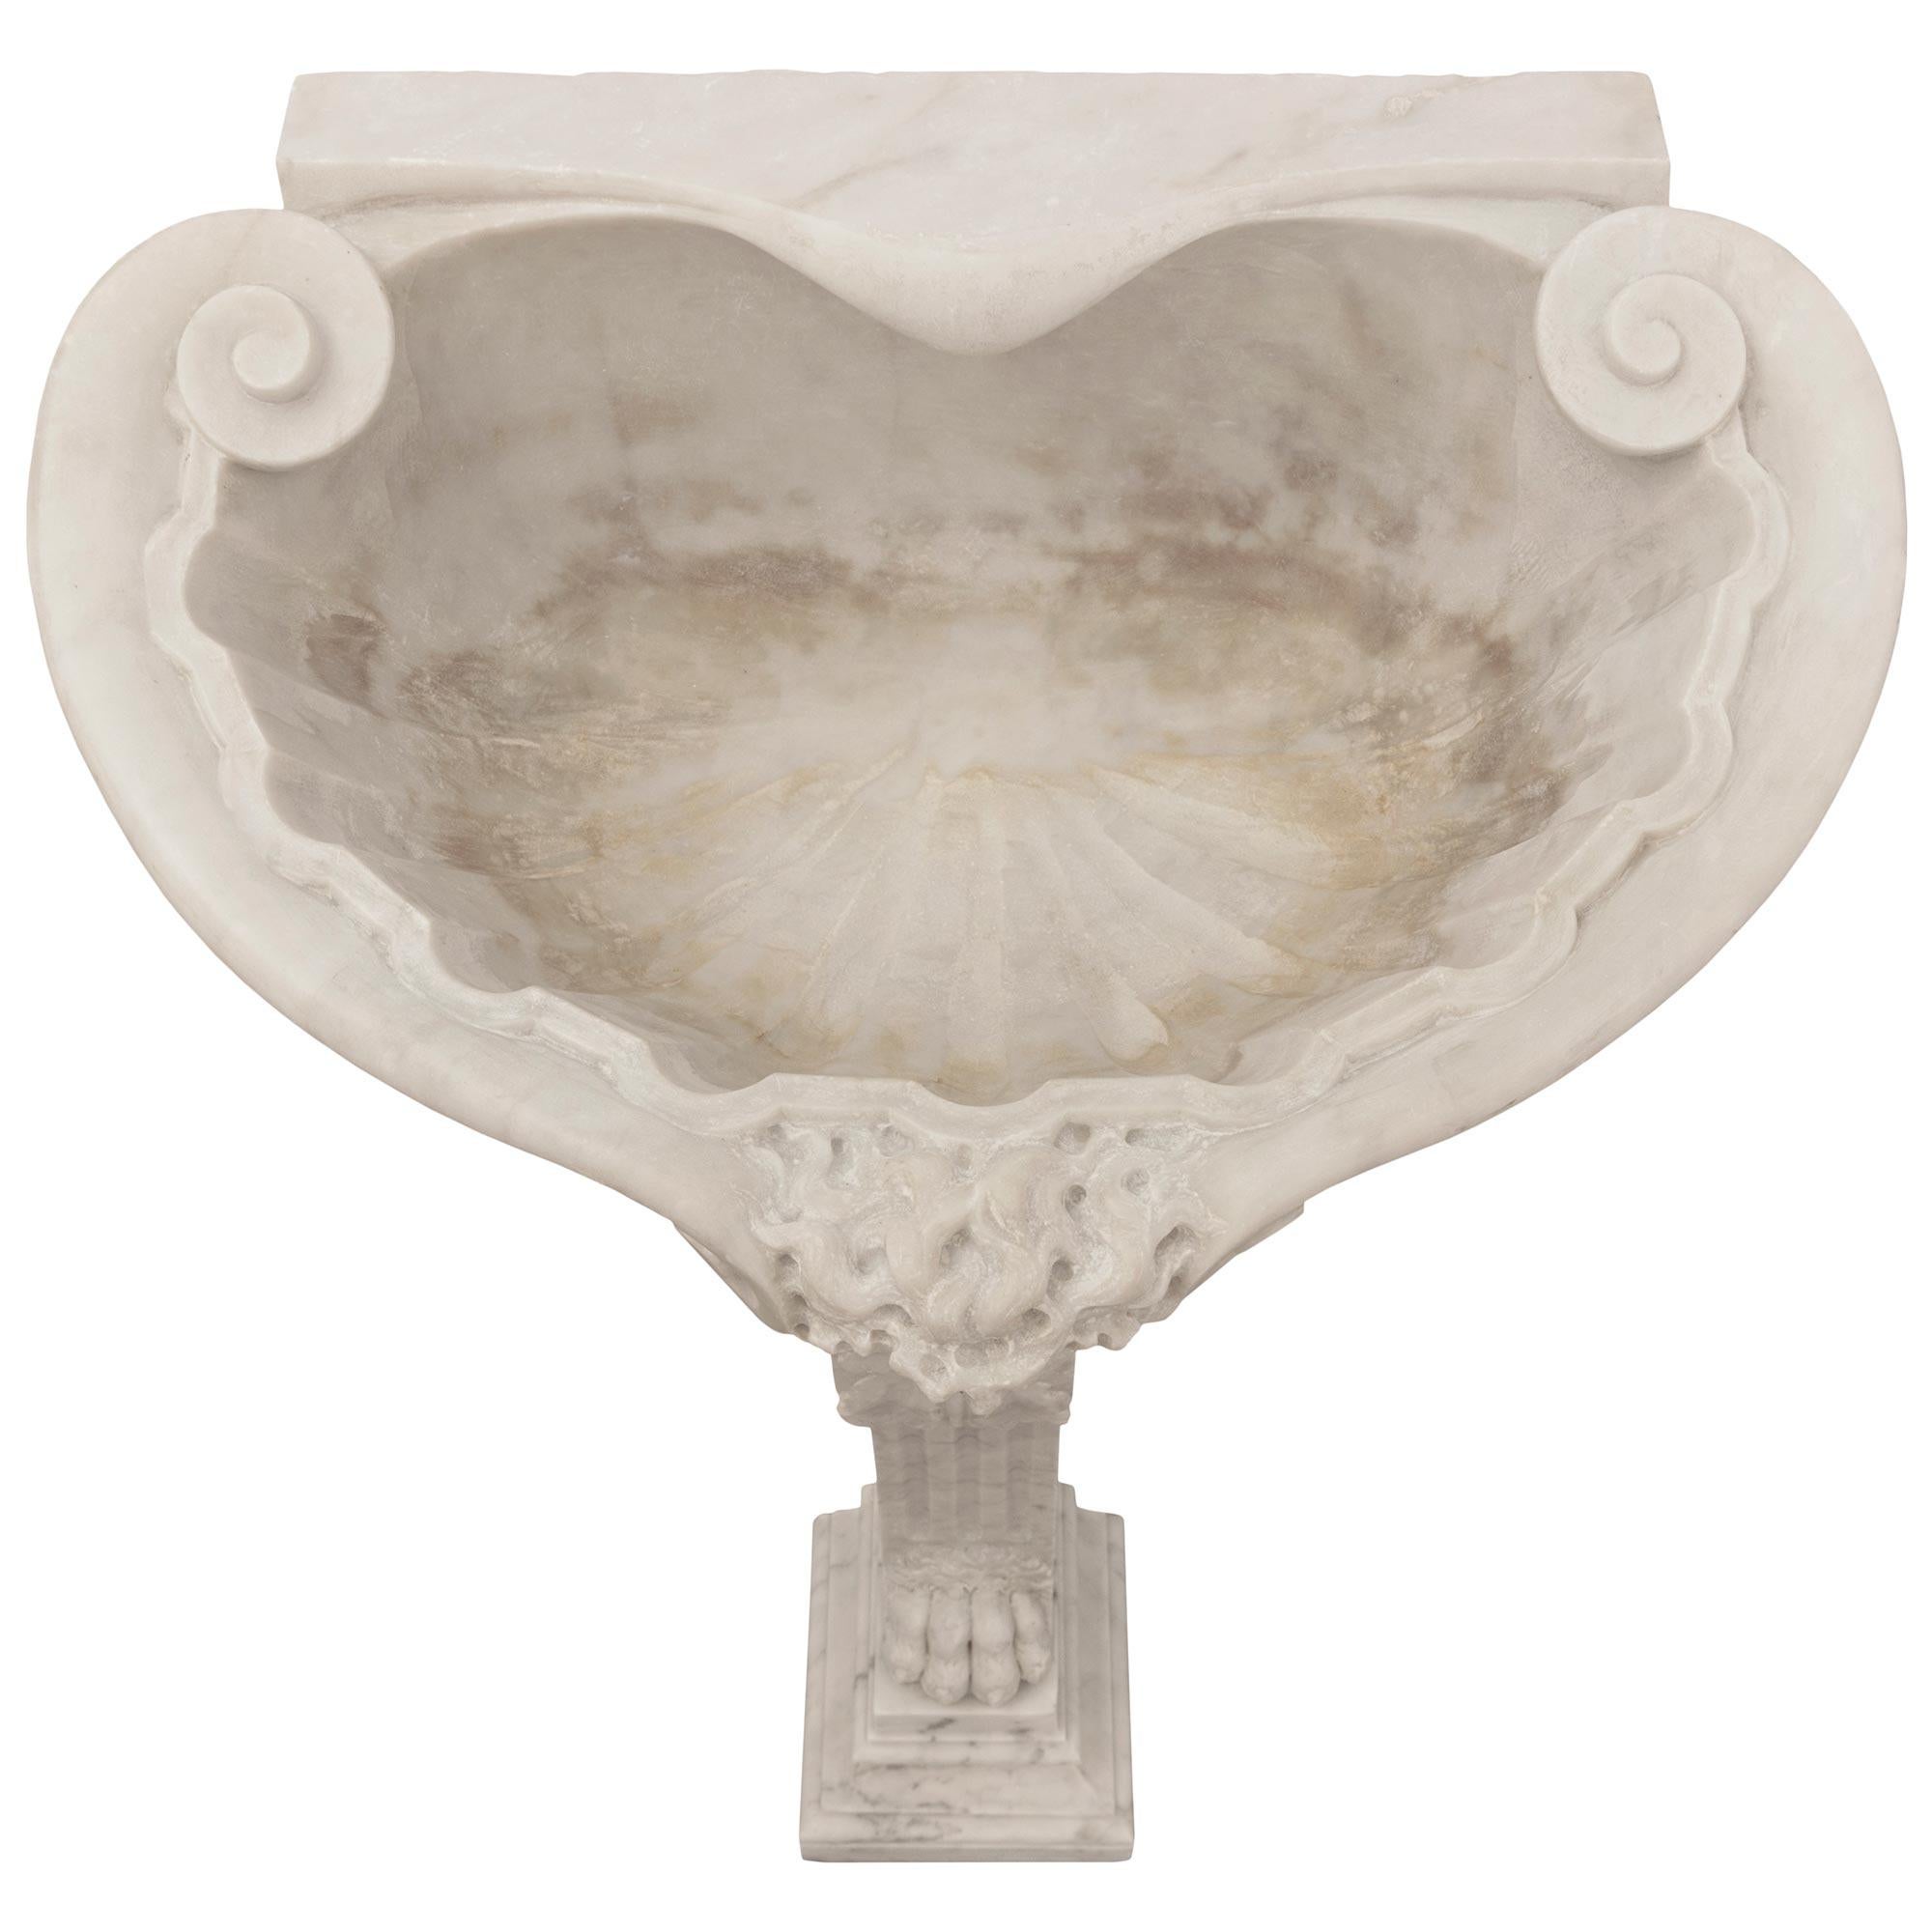 Carrara Marble An Italian 19th century Neo-Classical st Carrara marble bird bath/sink For Sale